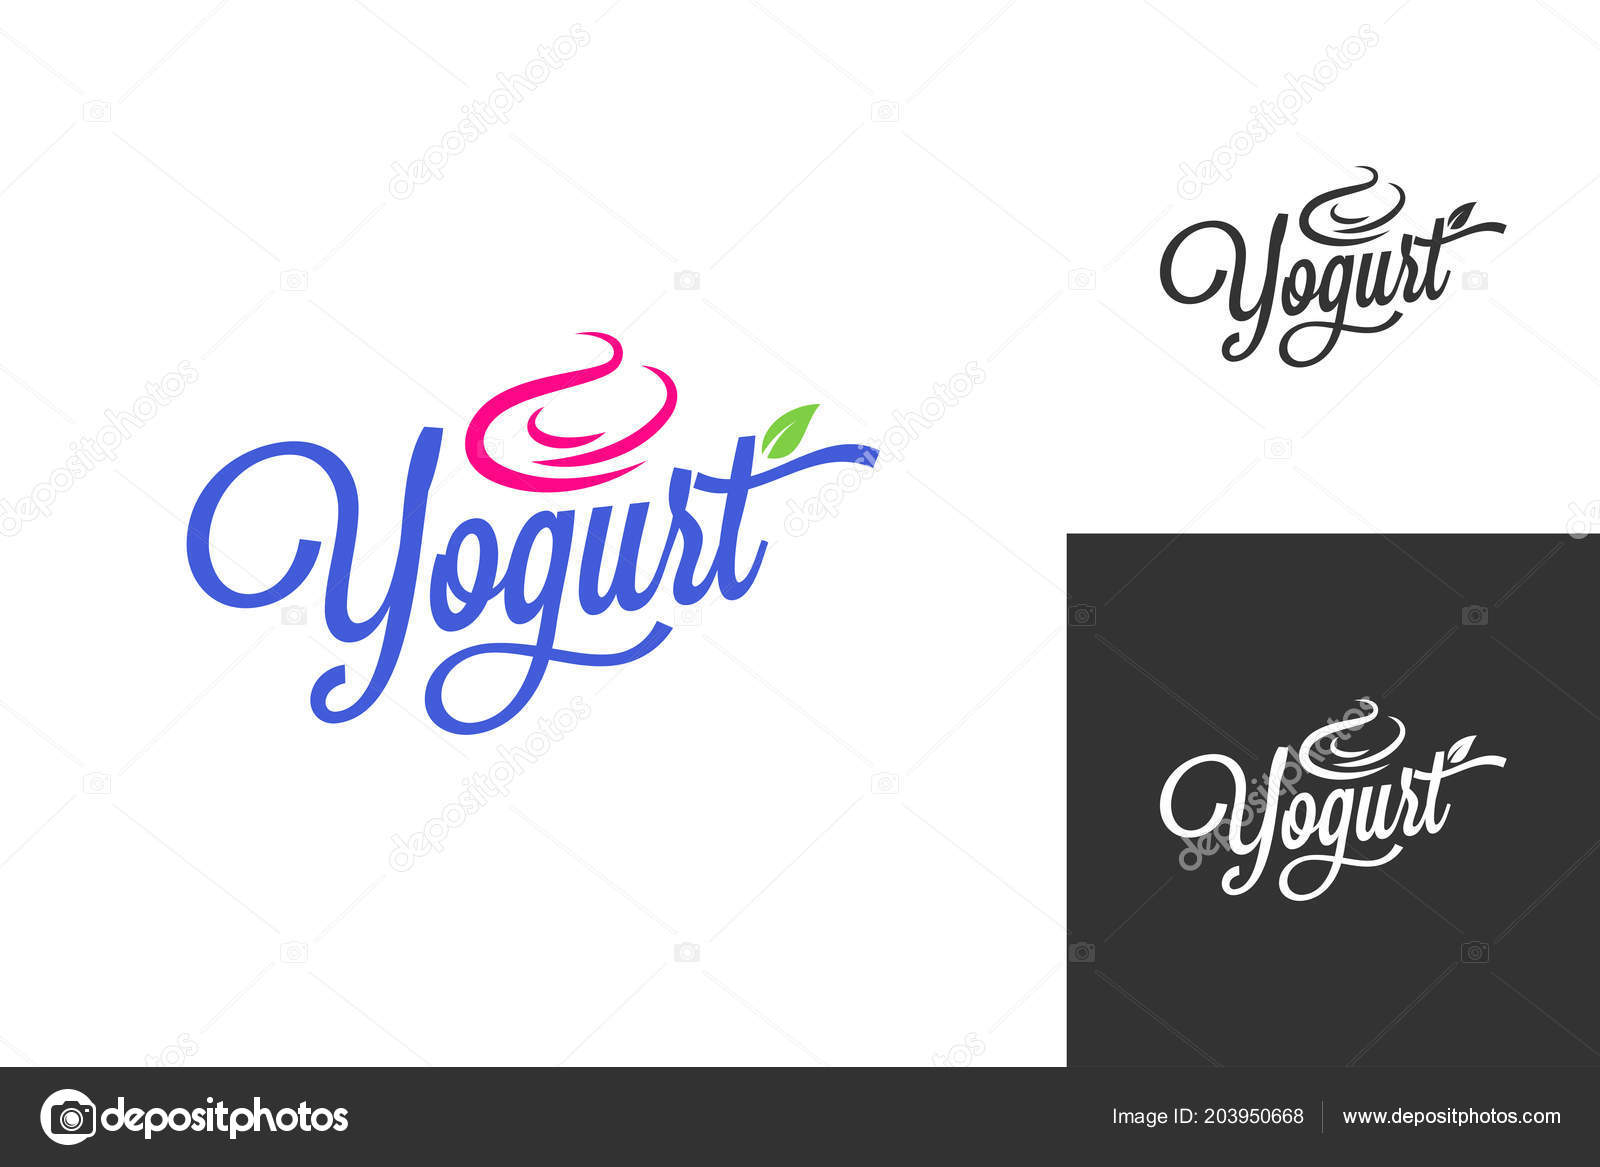 Yogurt cream logo. Frozen yogurt vintage lettering set background